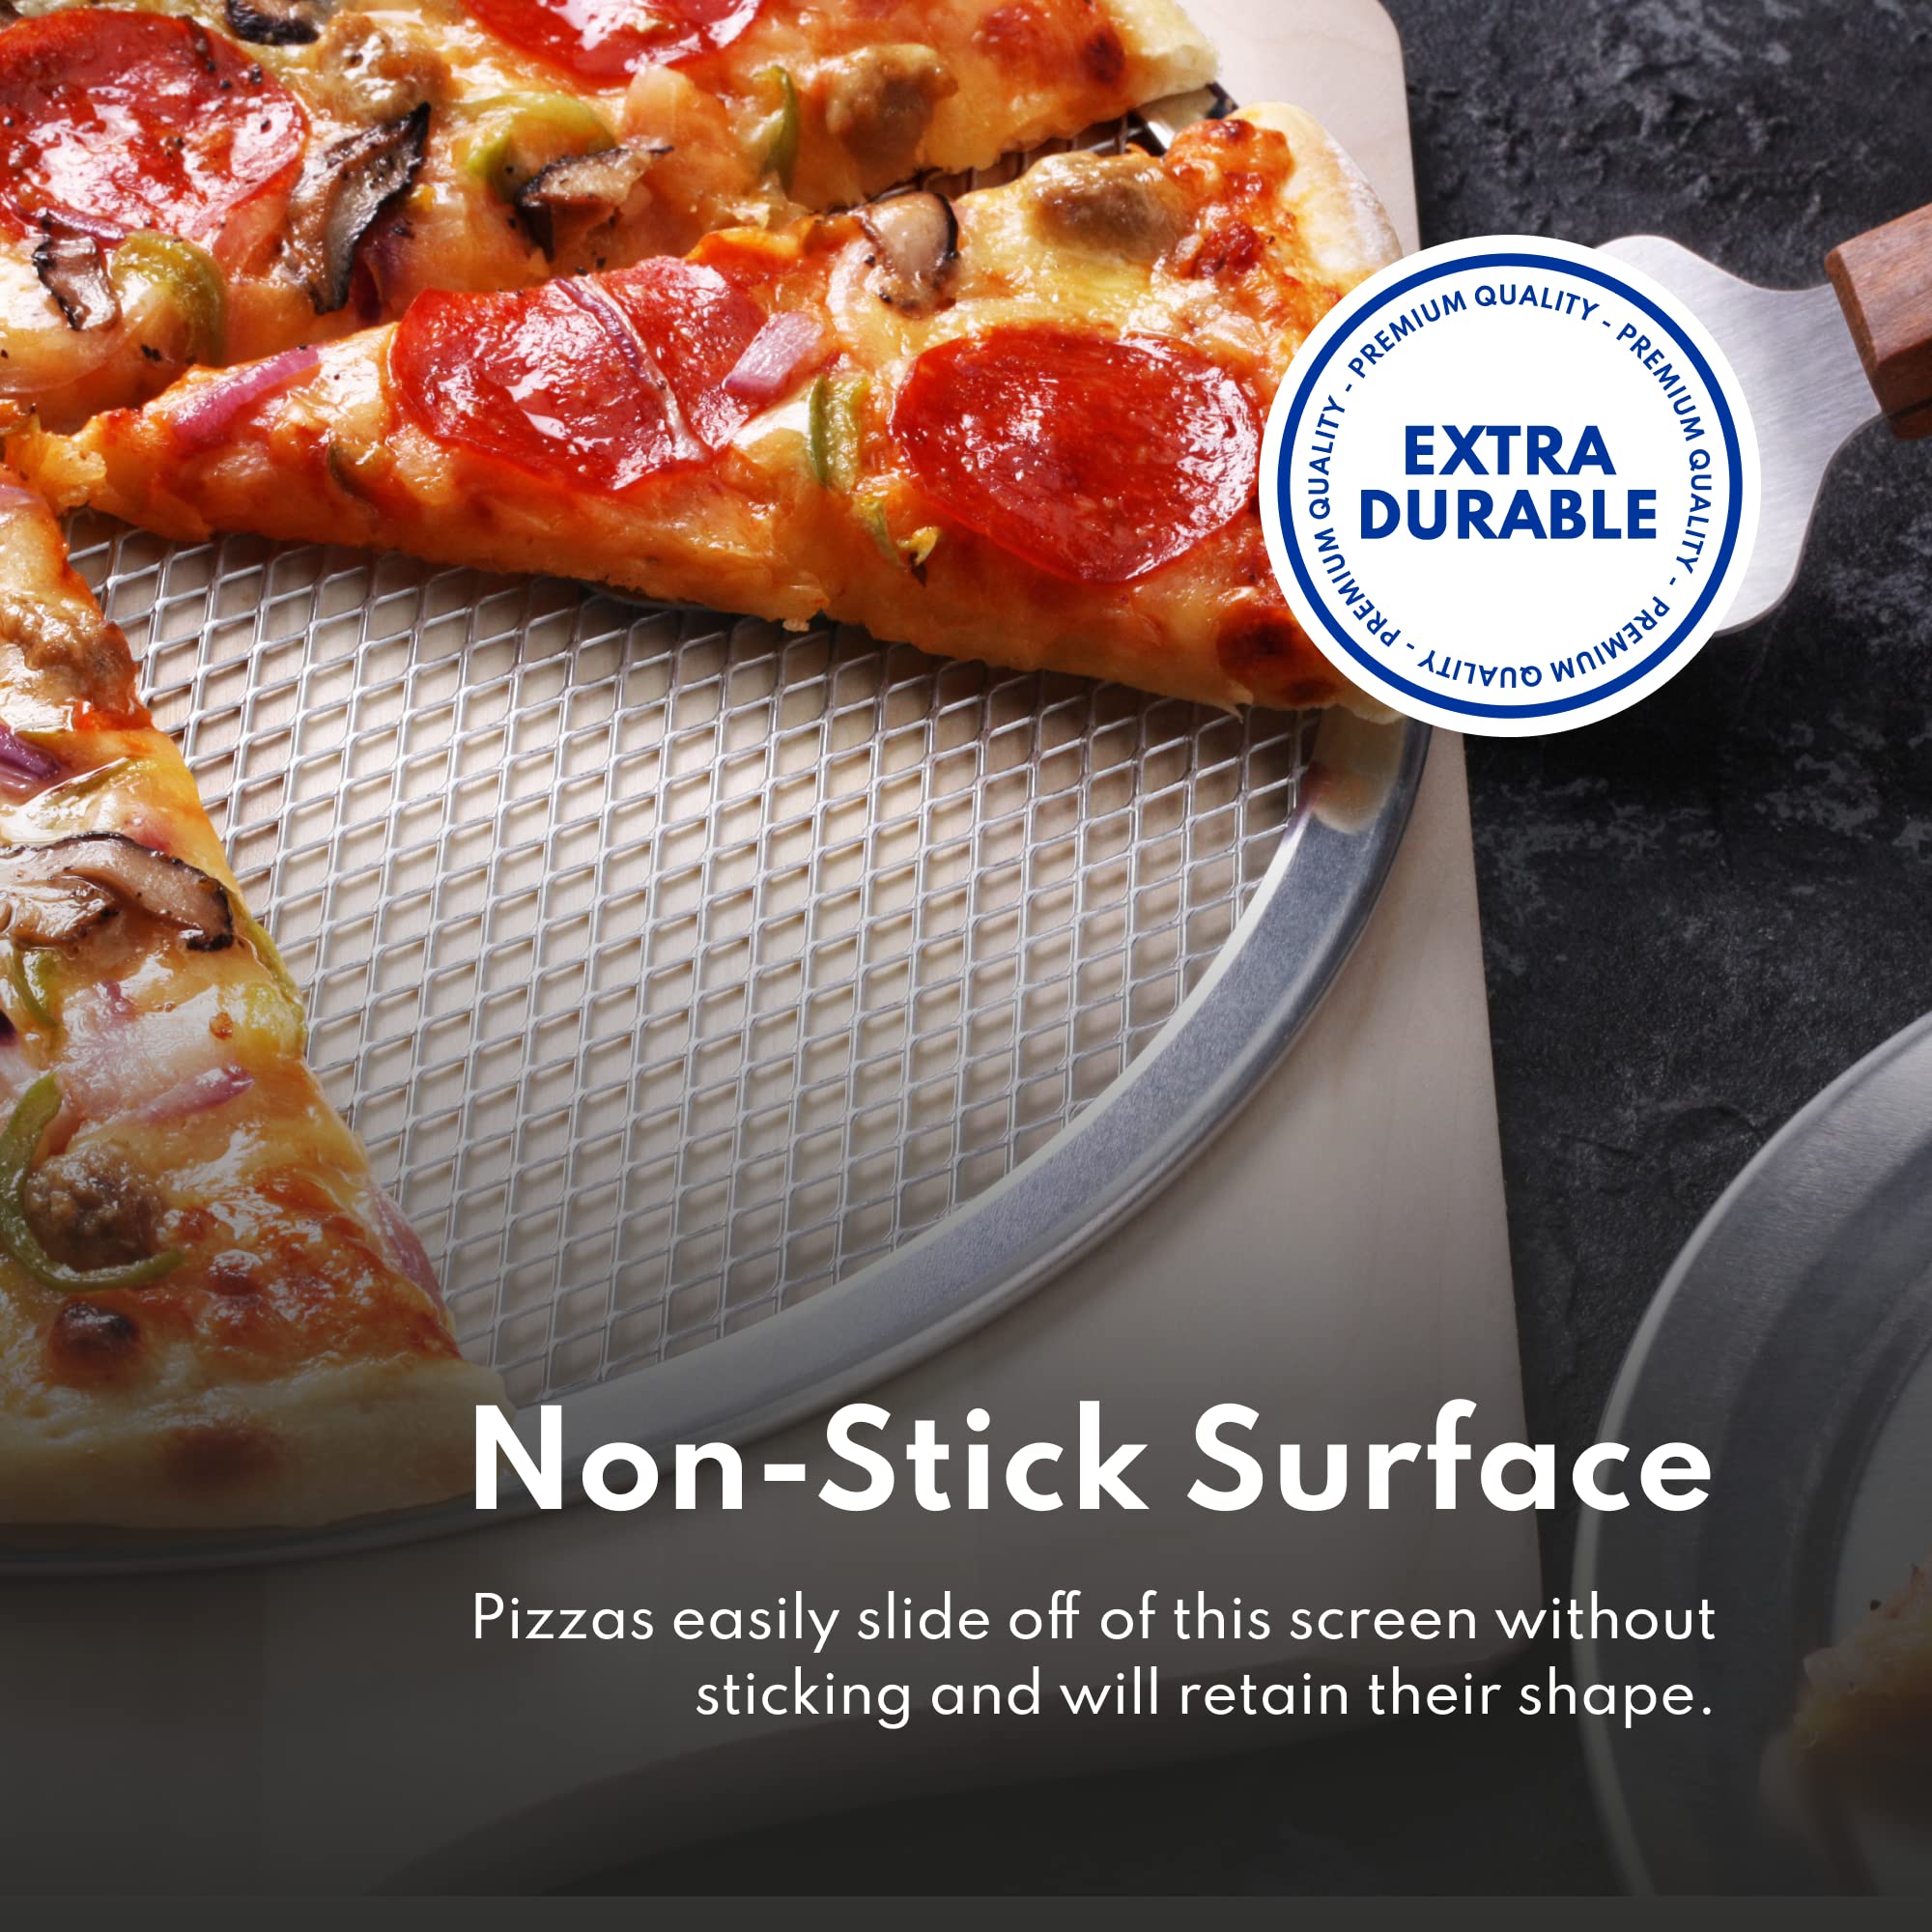 New Star Foodservice 50684 Restaurant-Grade Aluminum Pizza Baking Screen, Seamless, 14-Inch